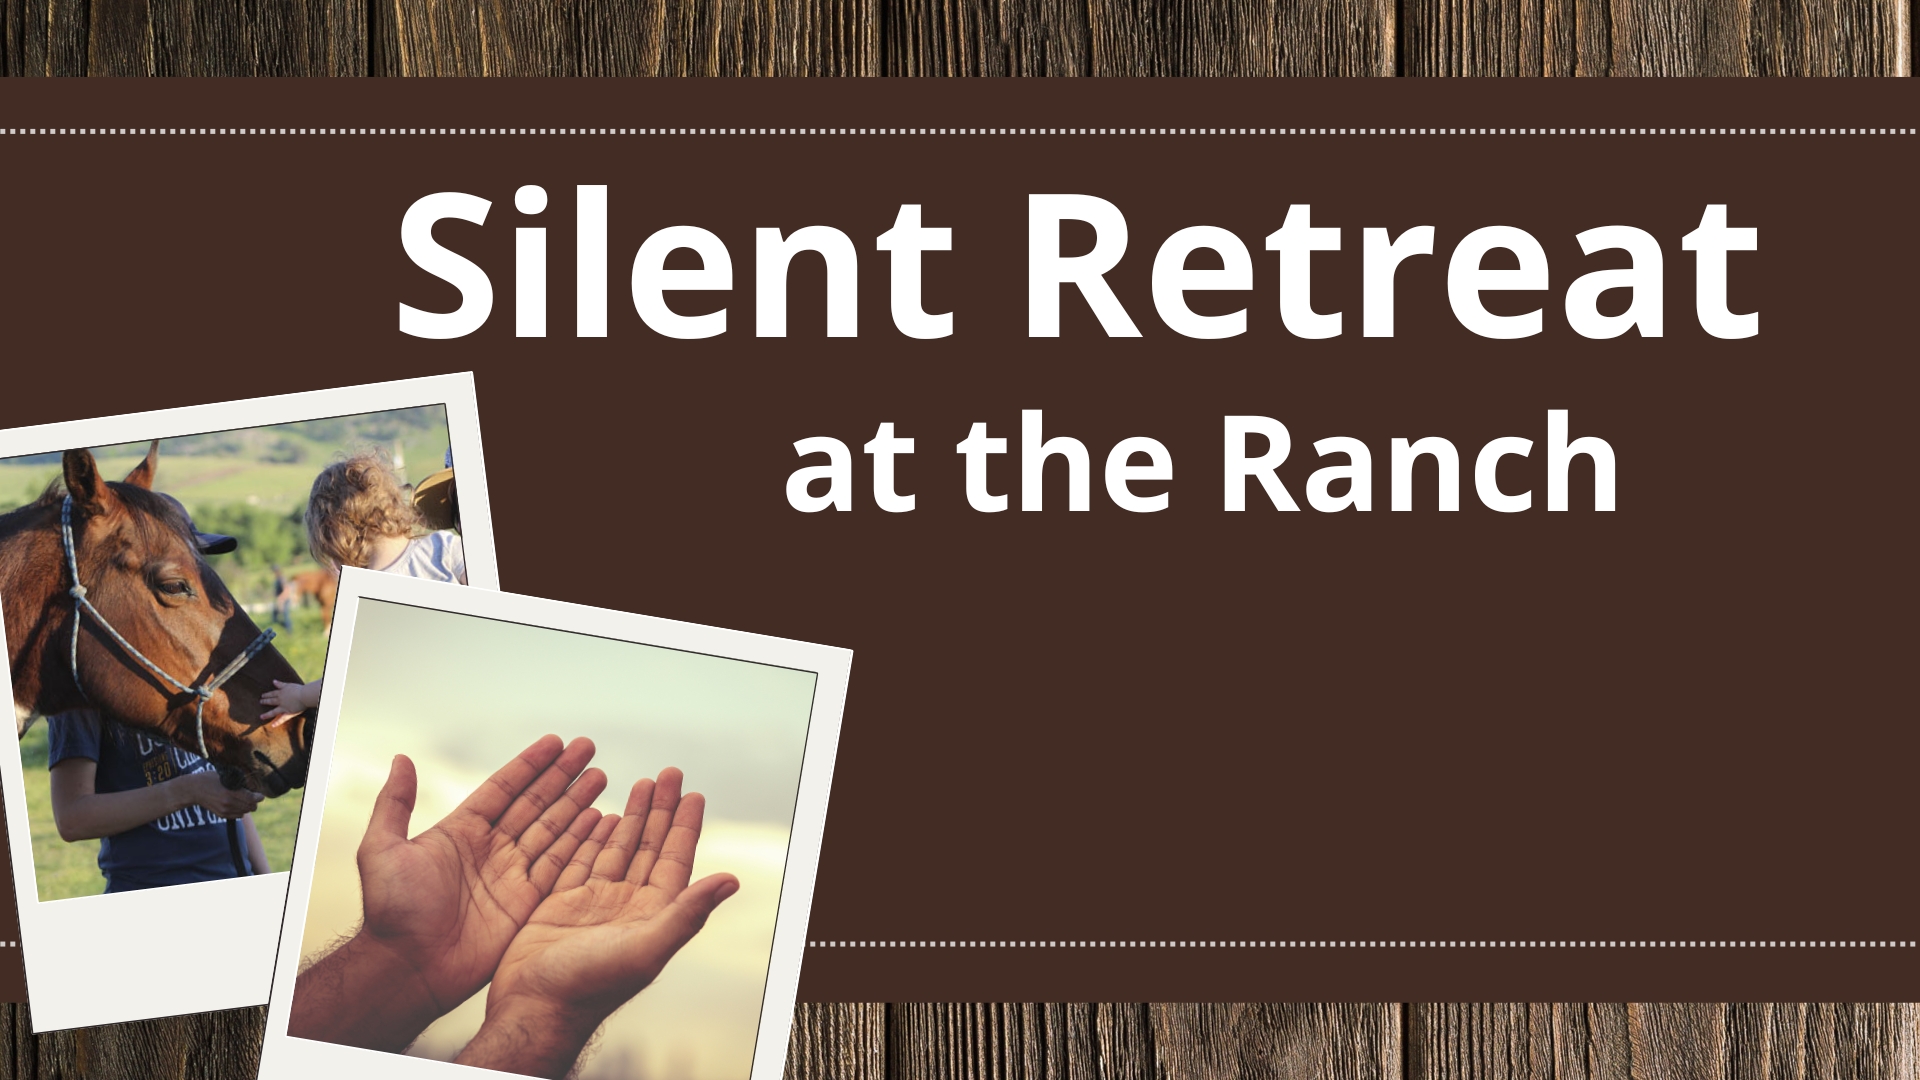 Slient Retreat at Abundant Life Ranch